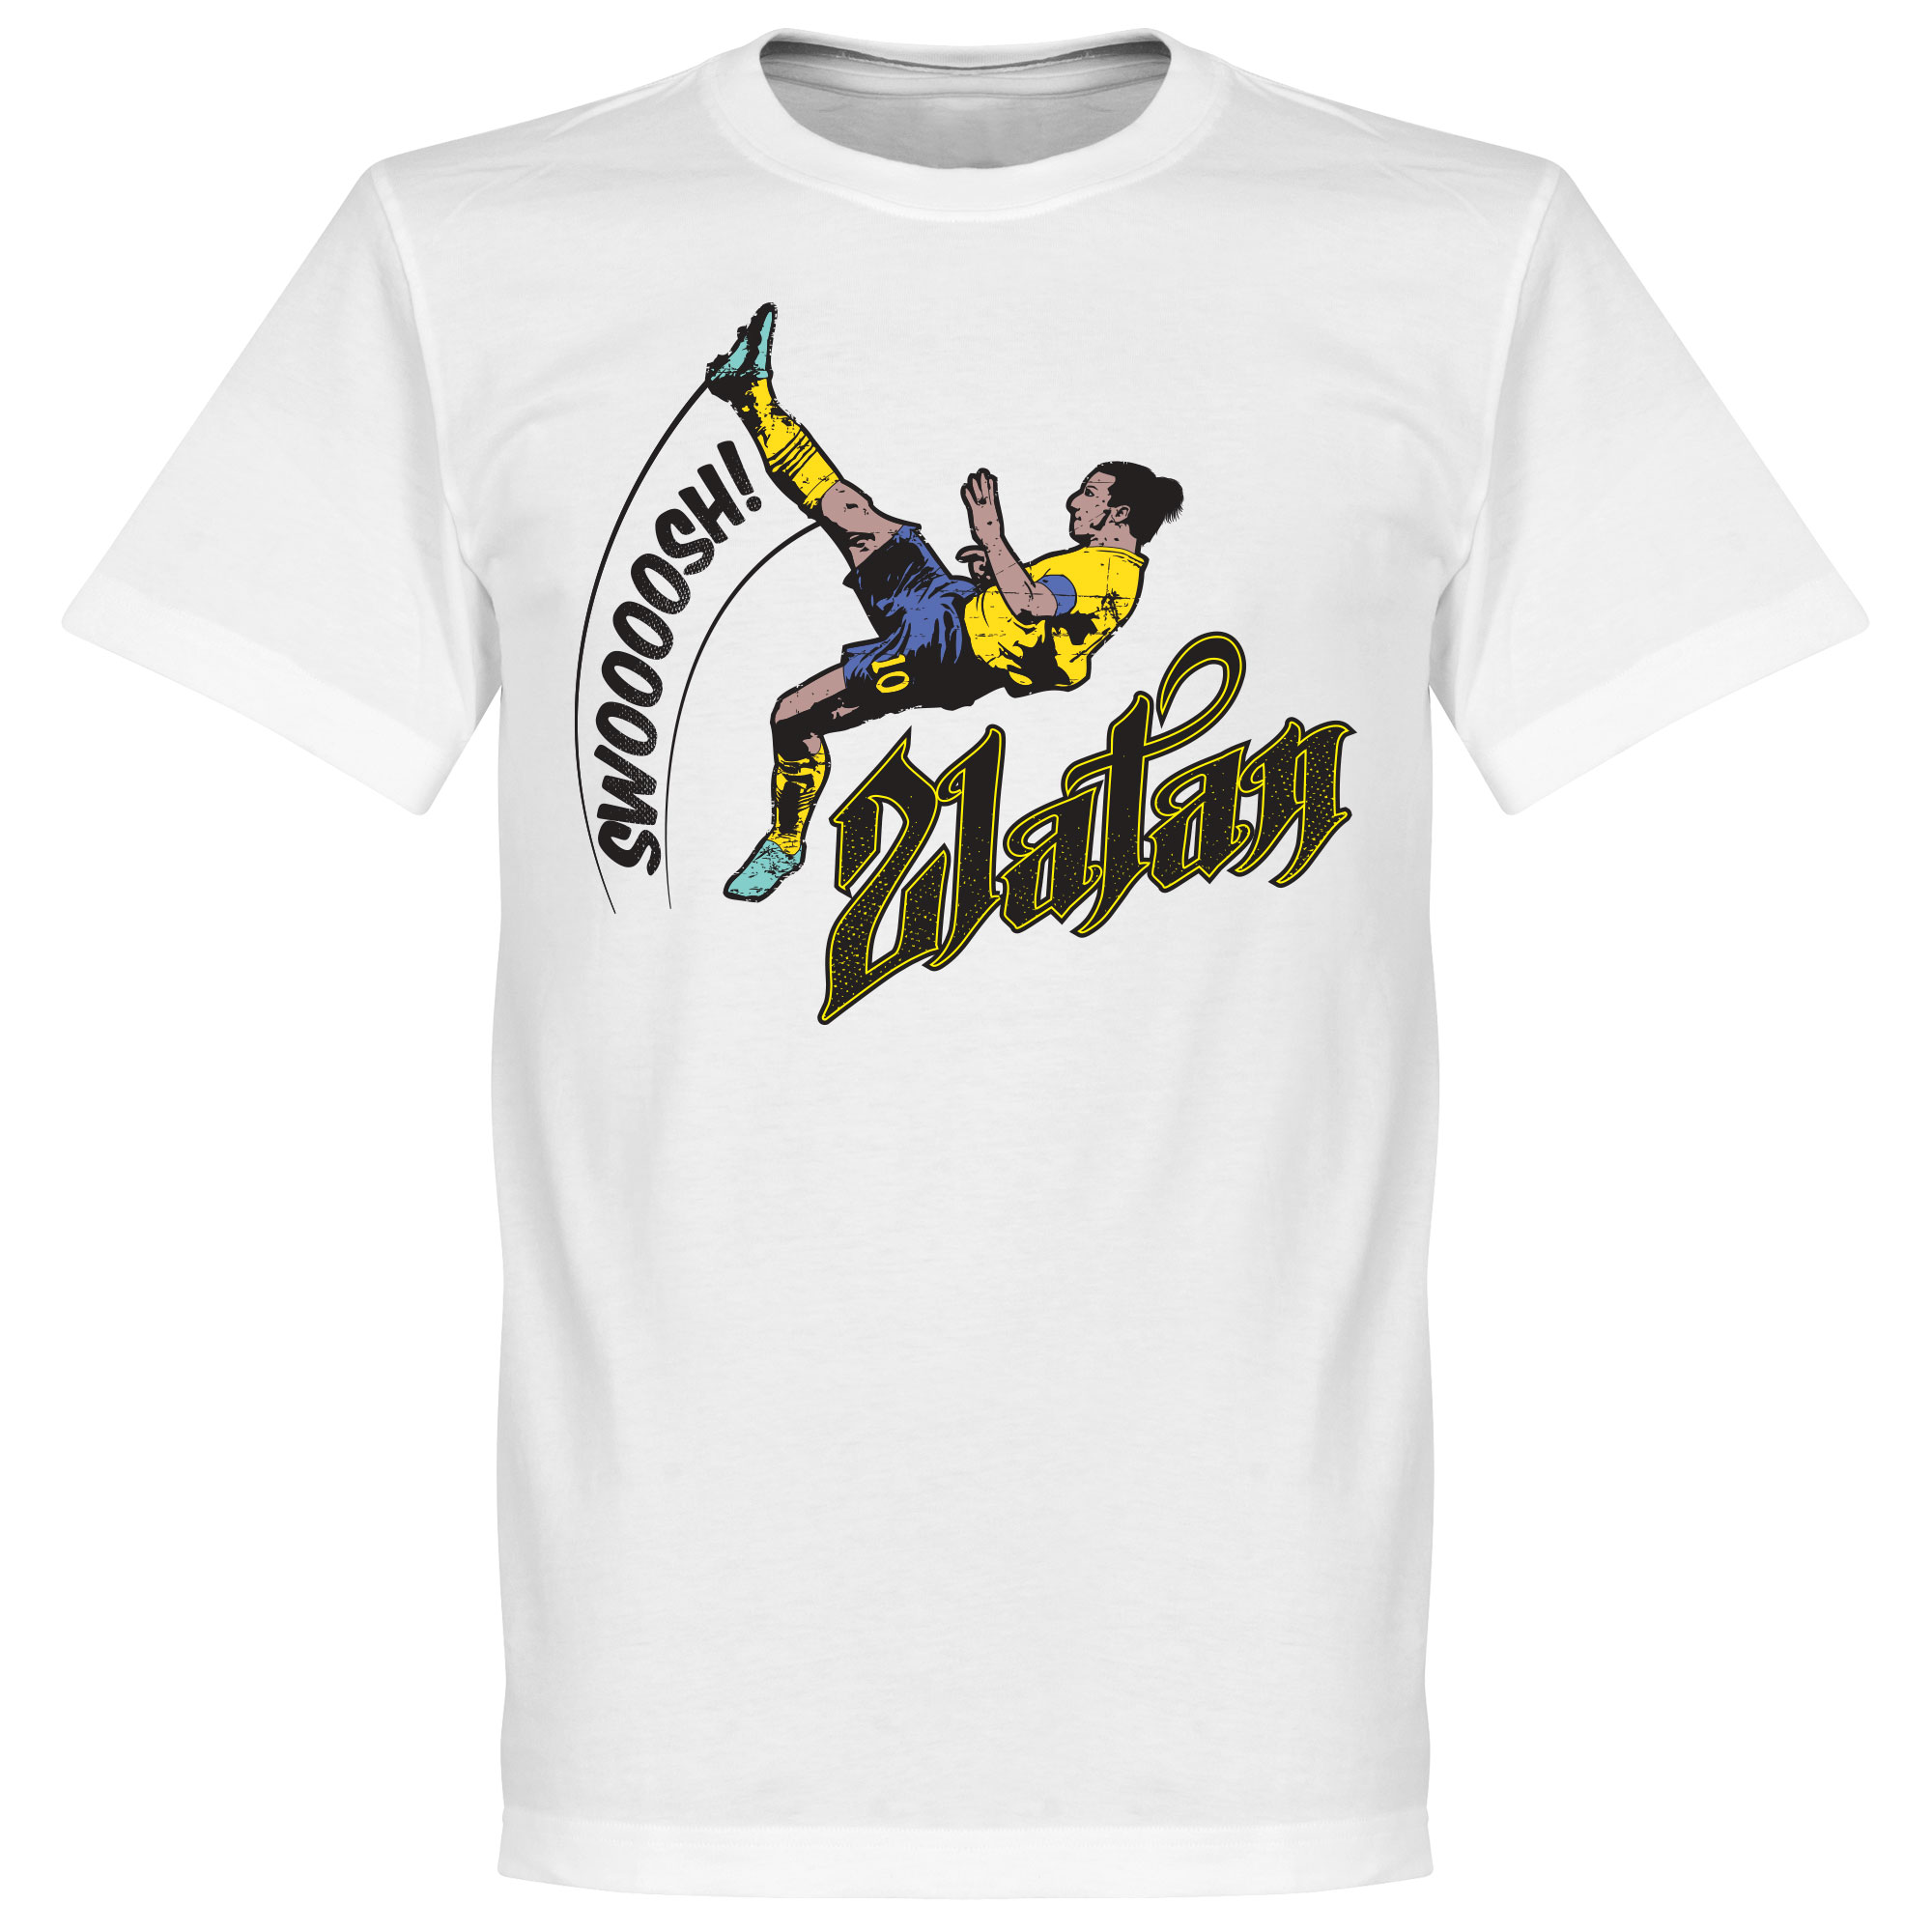 Zlatan Ibrahimovic Bicycle Kick T-shirt XS